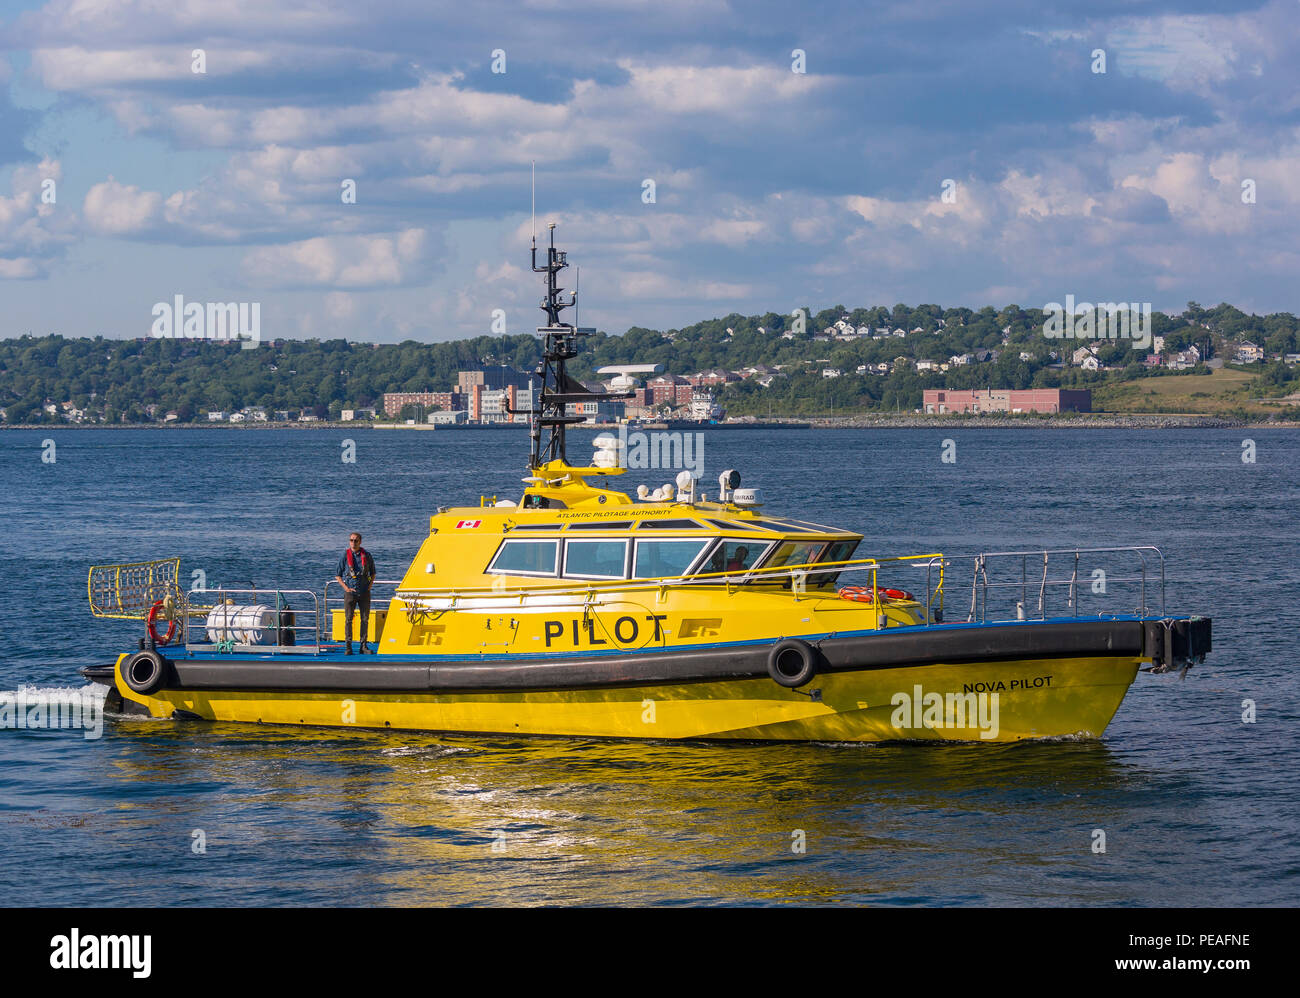 HALIFAX, NOVA SCOTIA, CANADA - Pilot boat in harbor. Stock Photo